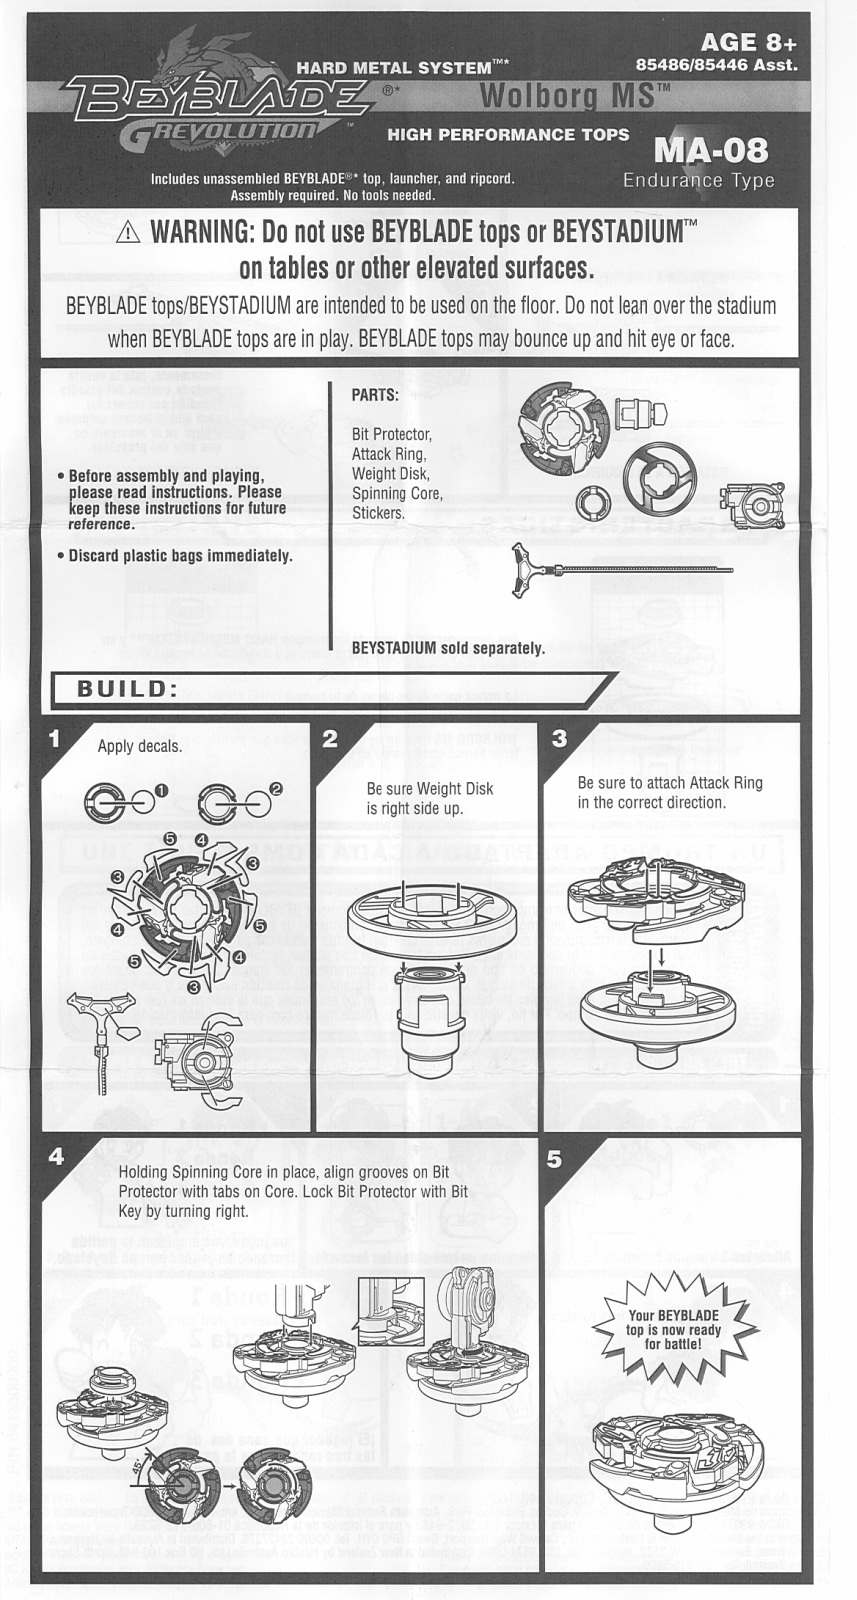 HASBRO Beyblade Grevolution Wolborg MS MA08 User Manual